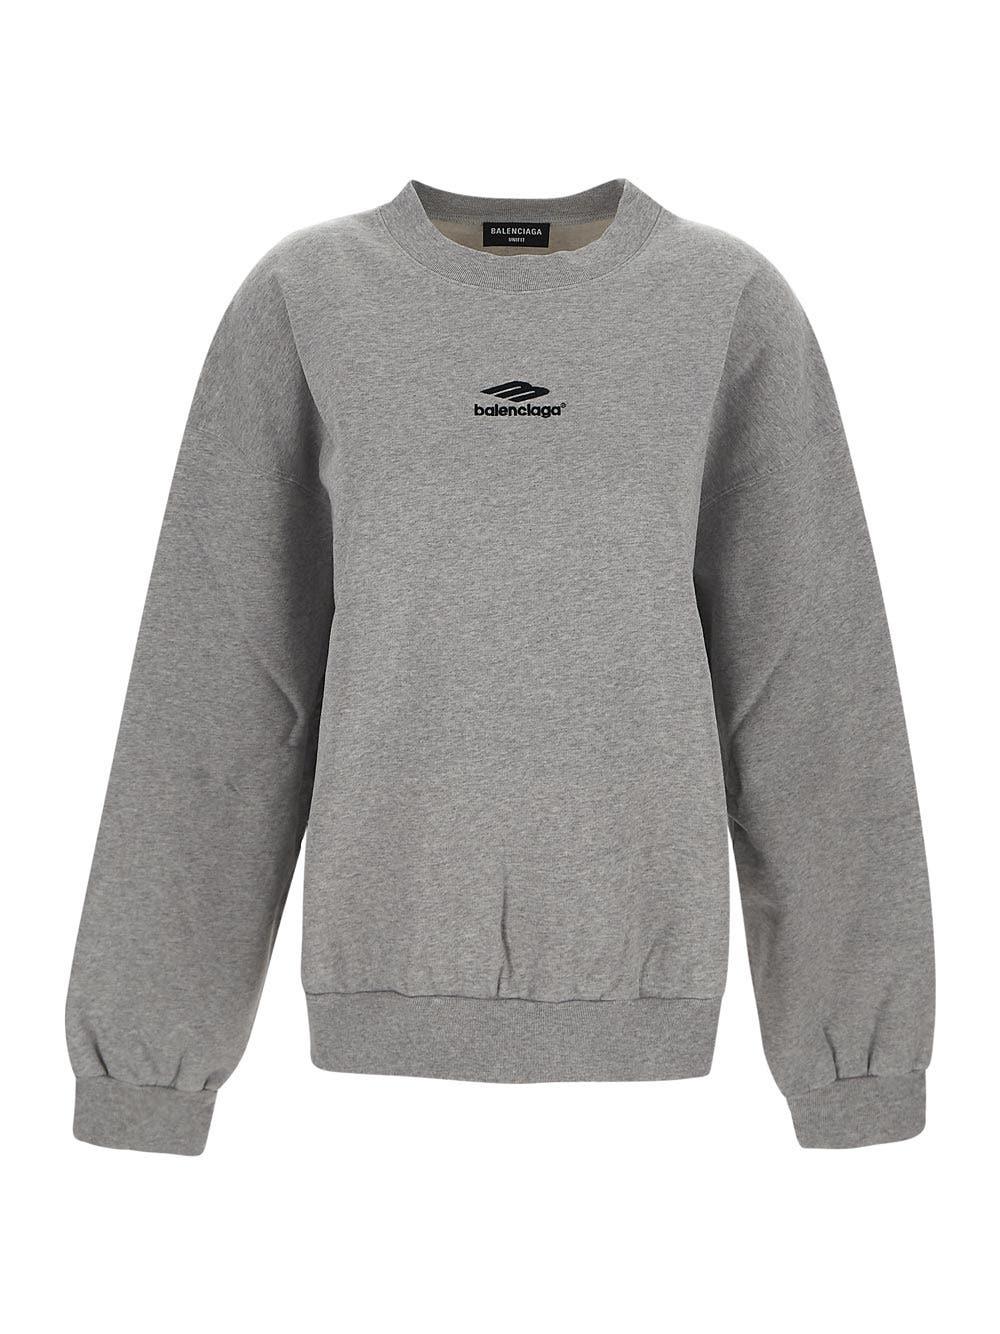 Balenciaga Logo Sweatshirt in Gray | Lyst